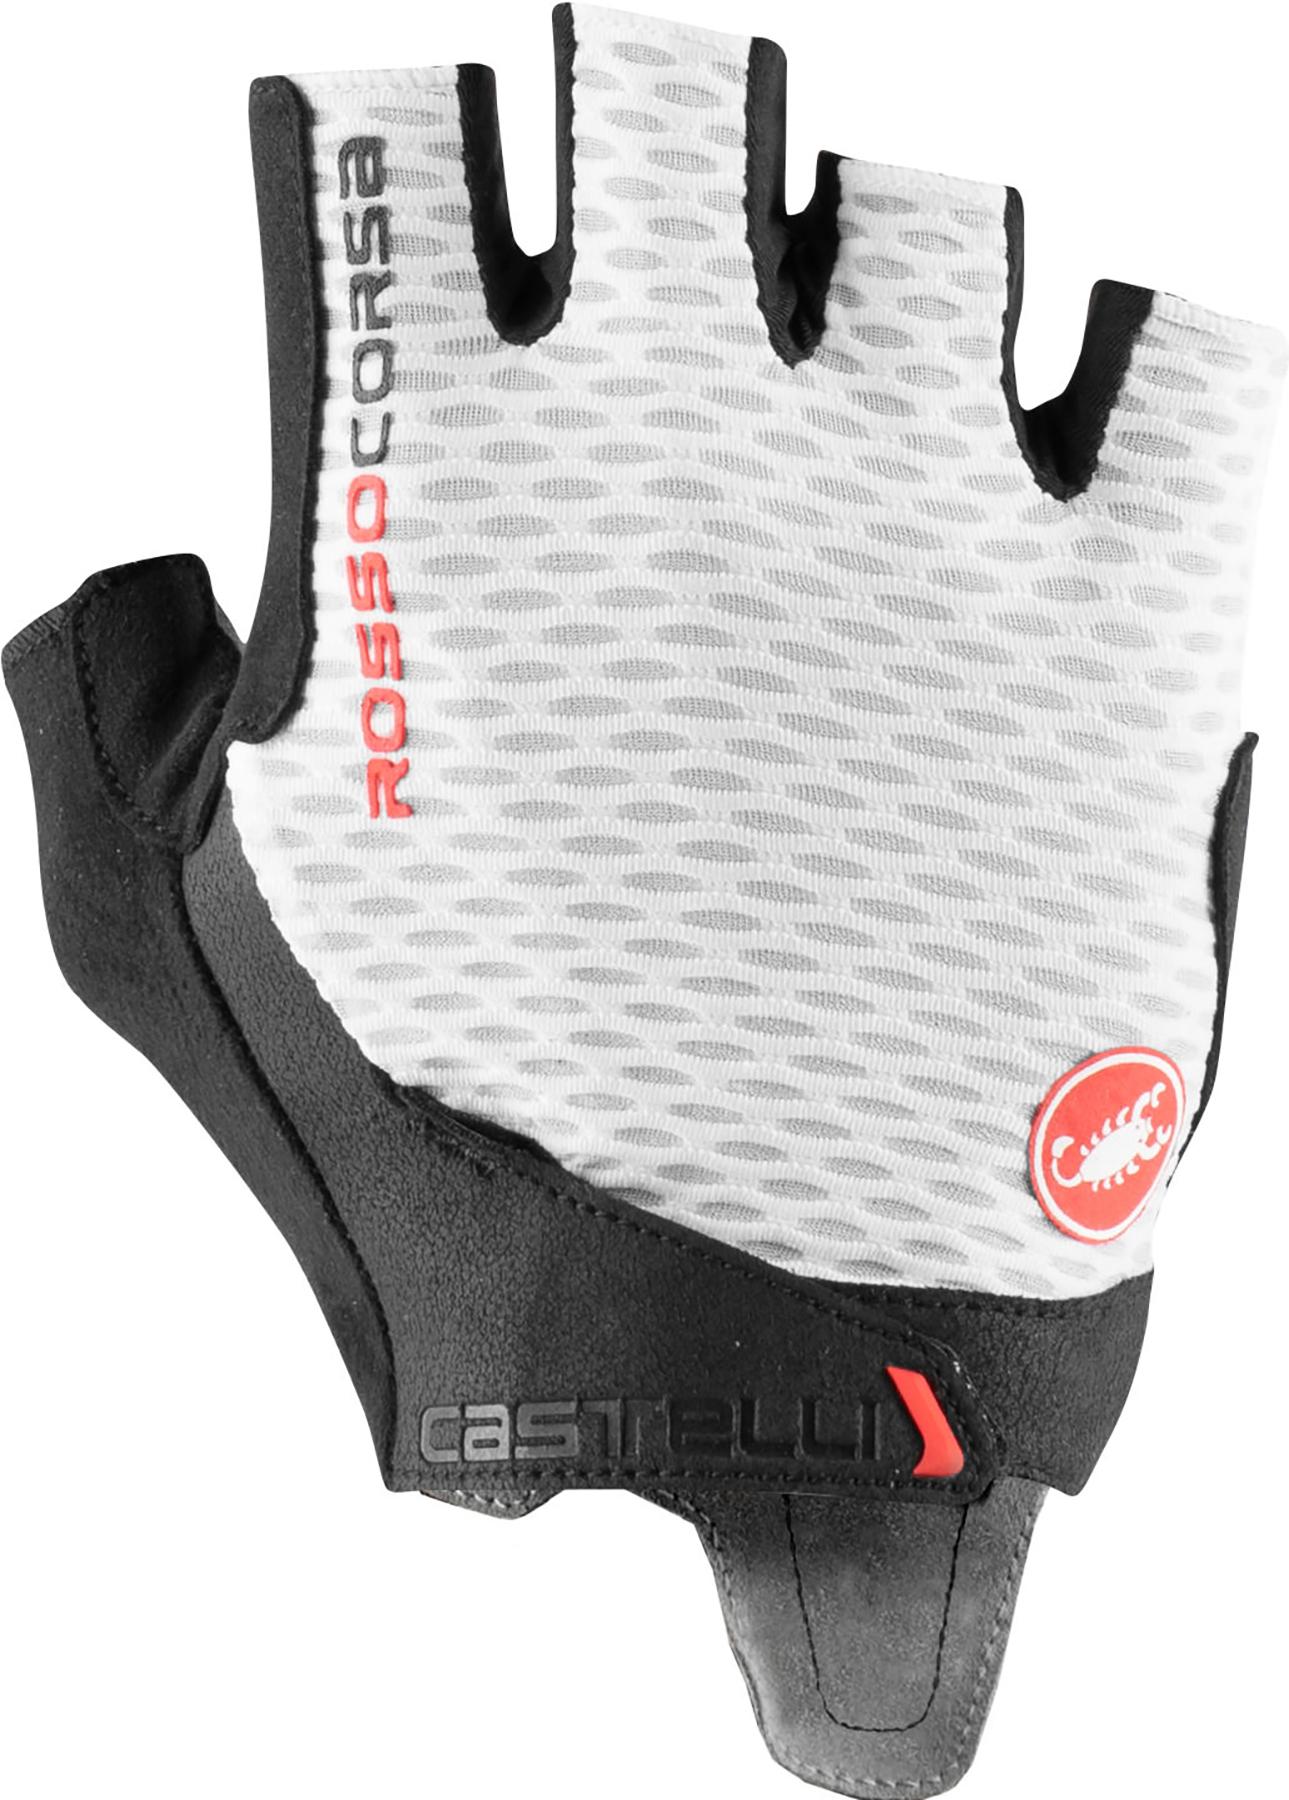 Castelli Rosso Corsa Pro V Cycling Gloves - White